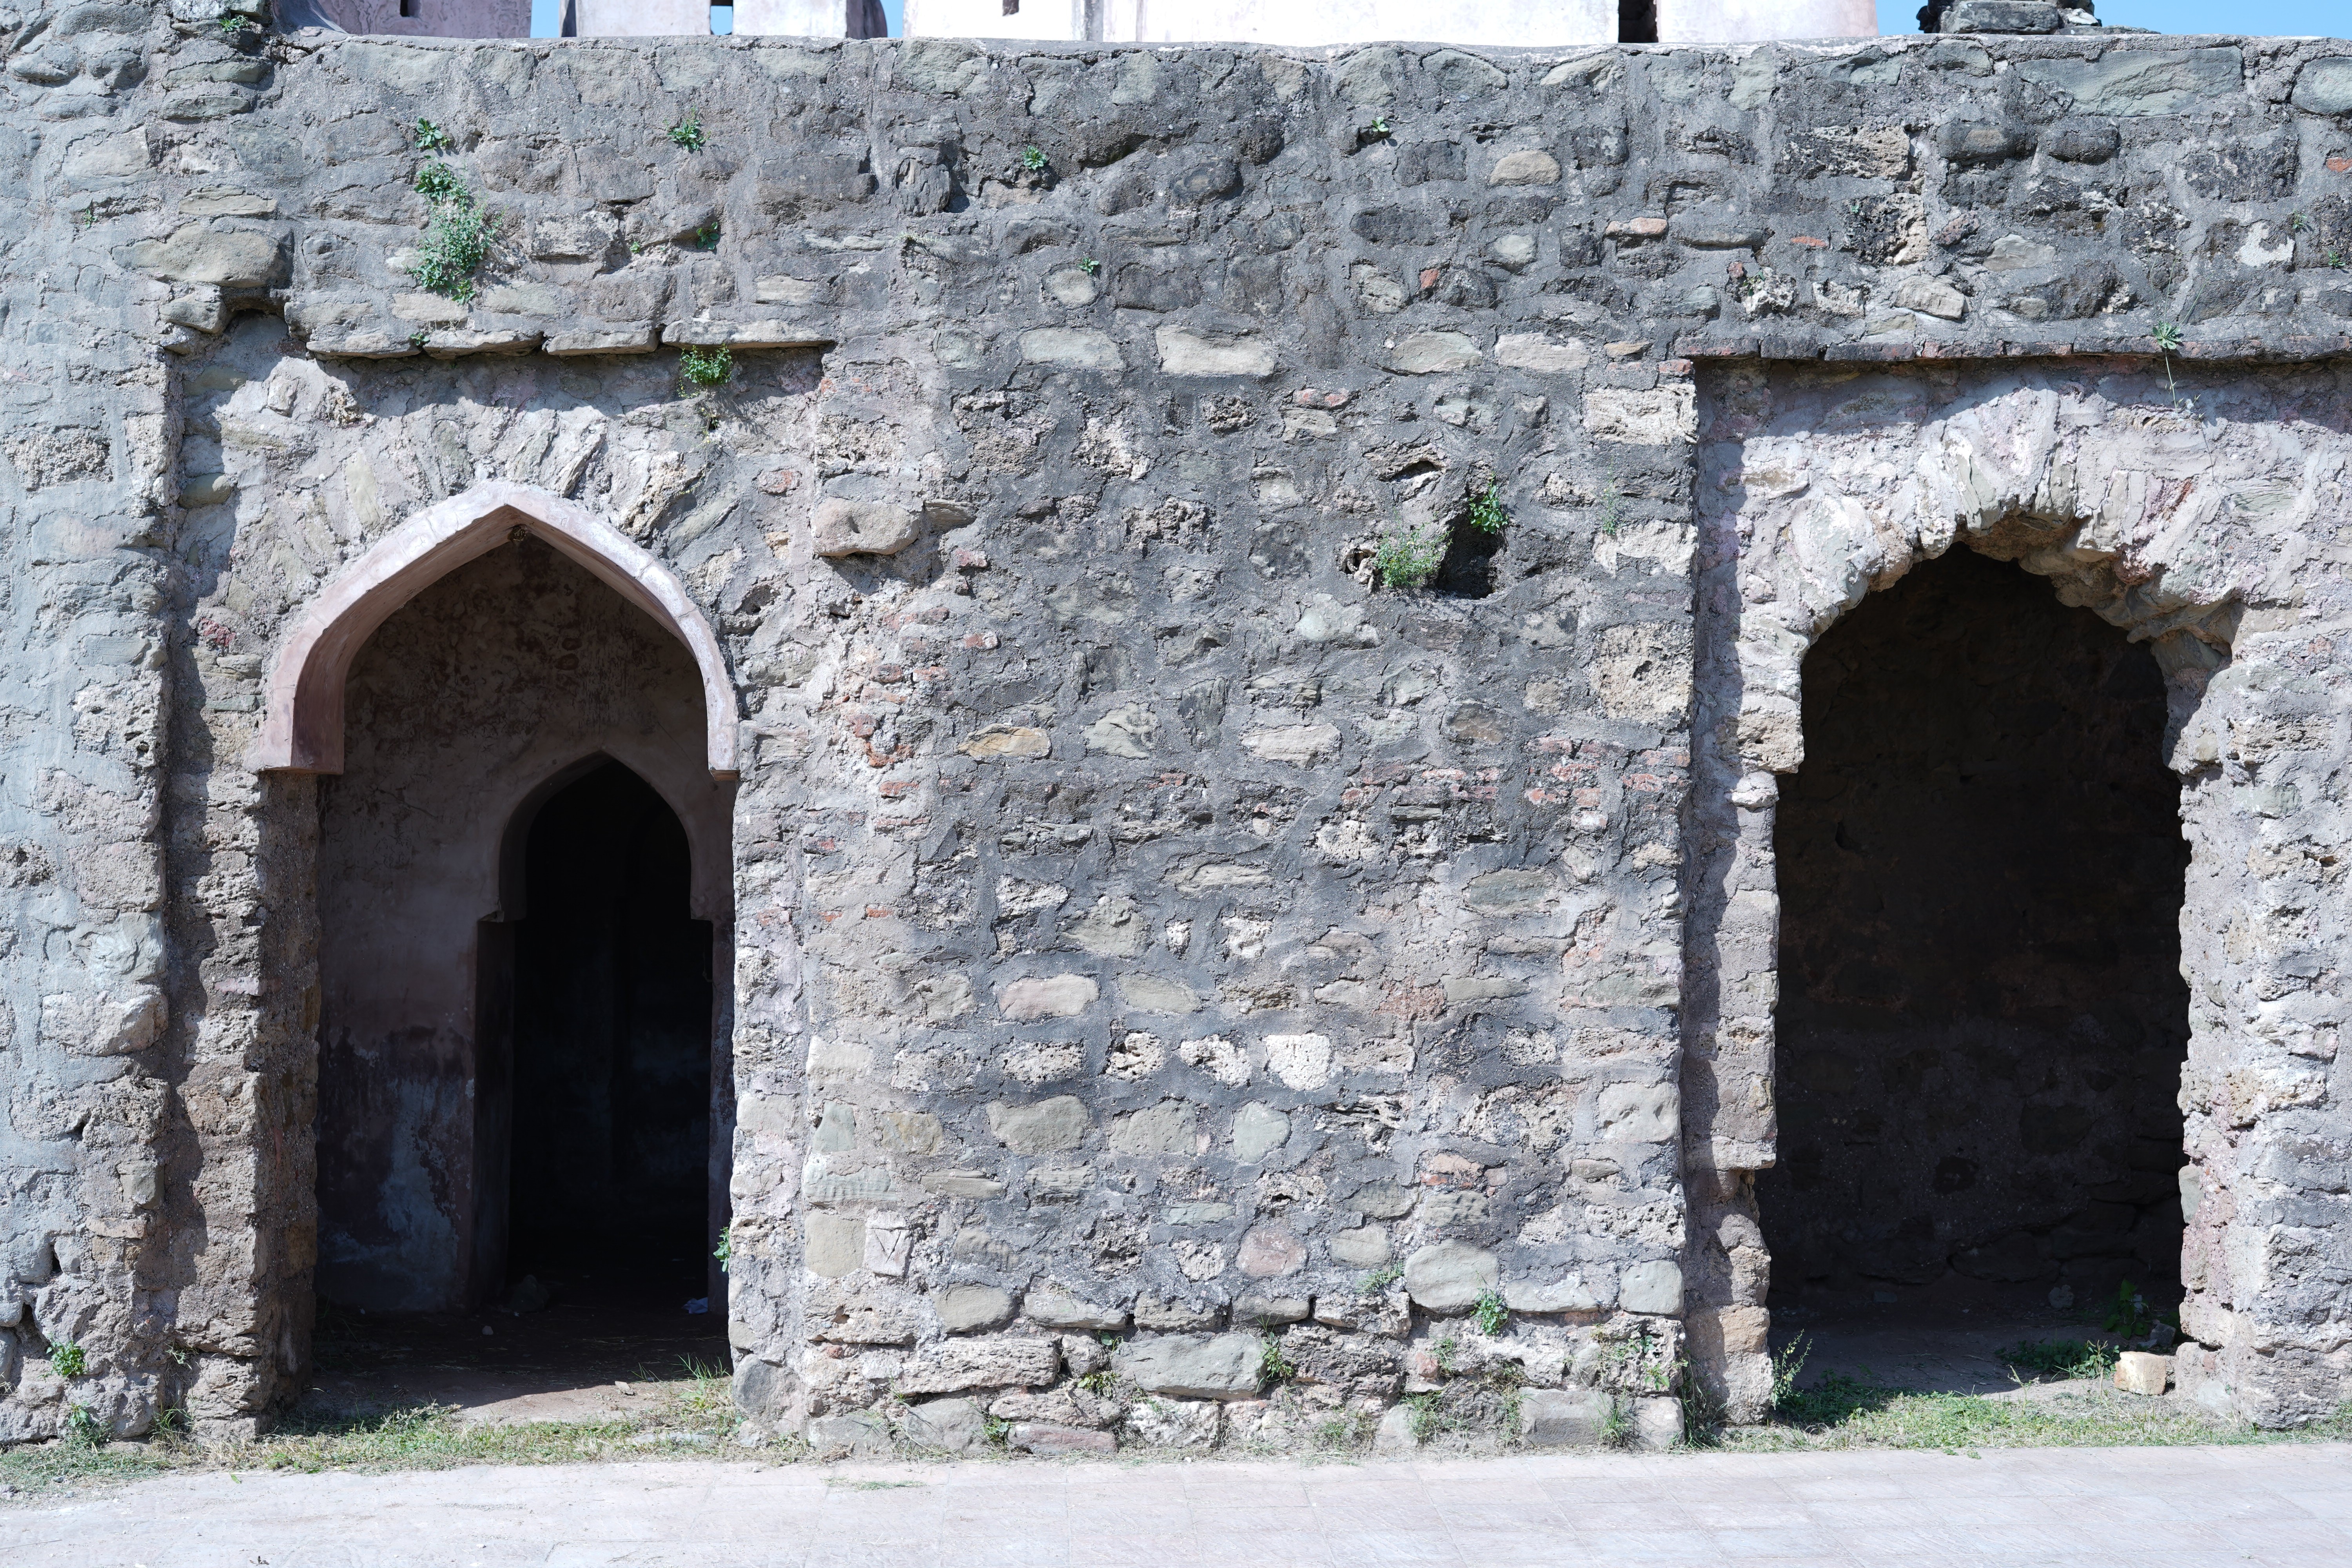 Ancient doorway architecture in Rawat Fort